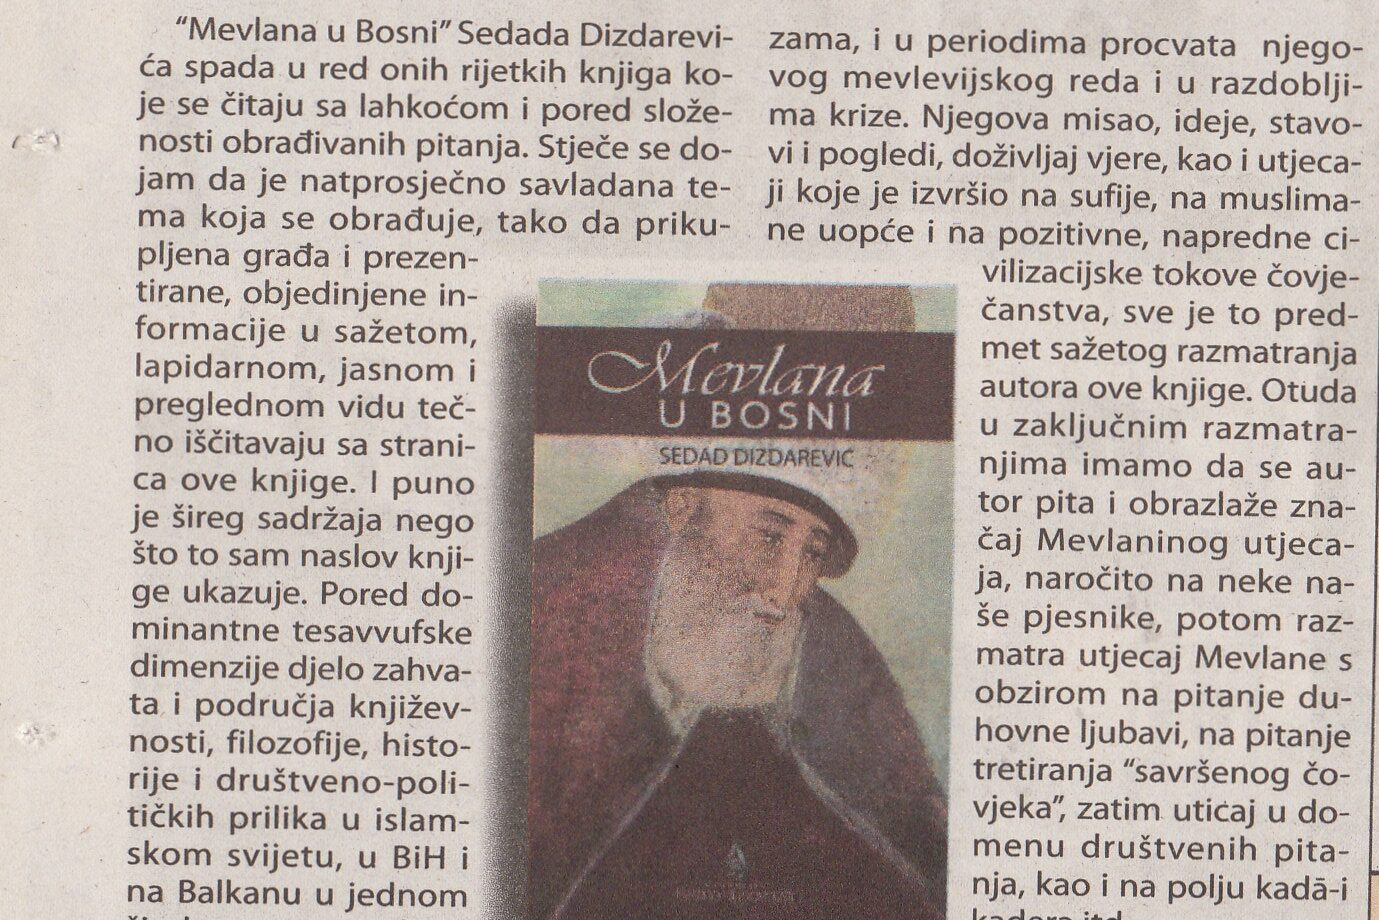 Mevlana u Bosni